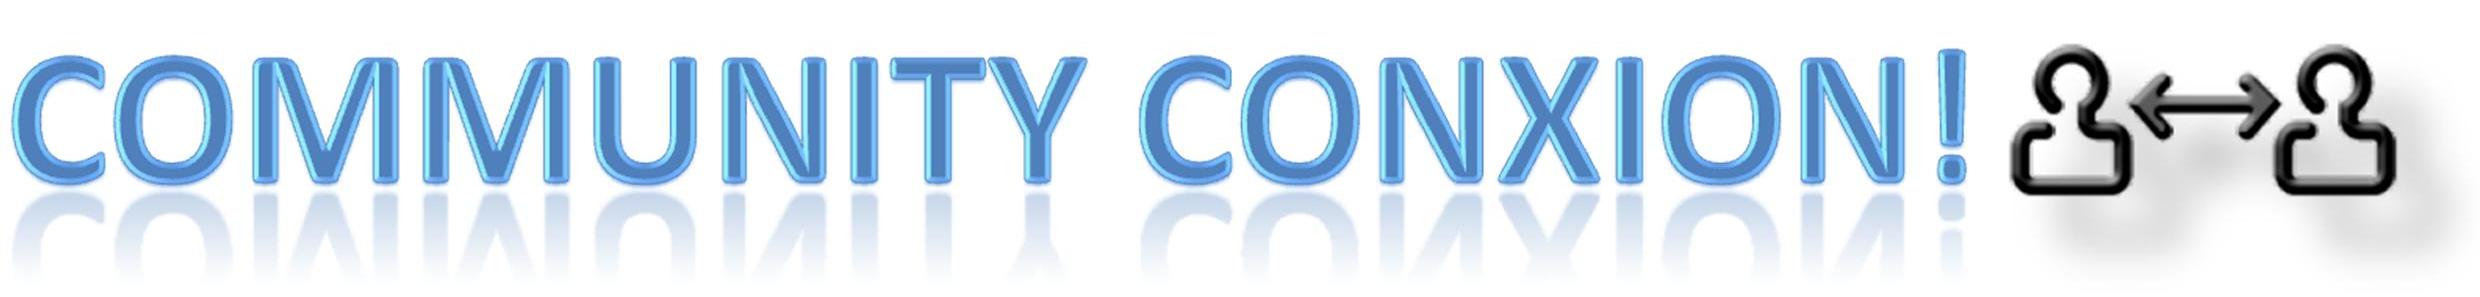 Community Conxion Logo